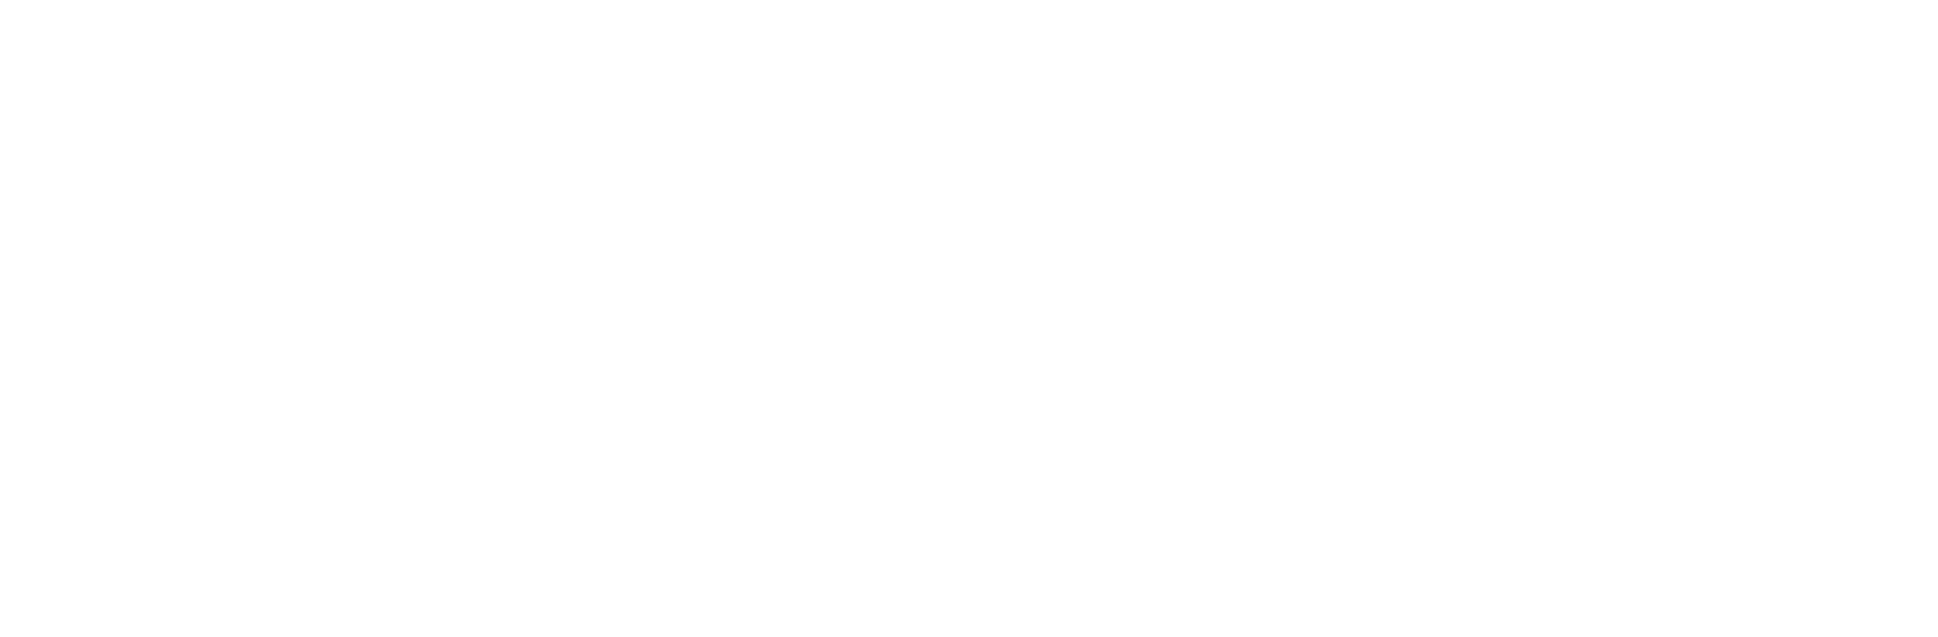 Torq-Logo-White-RGB